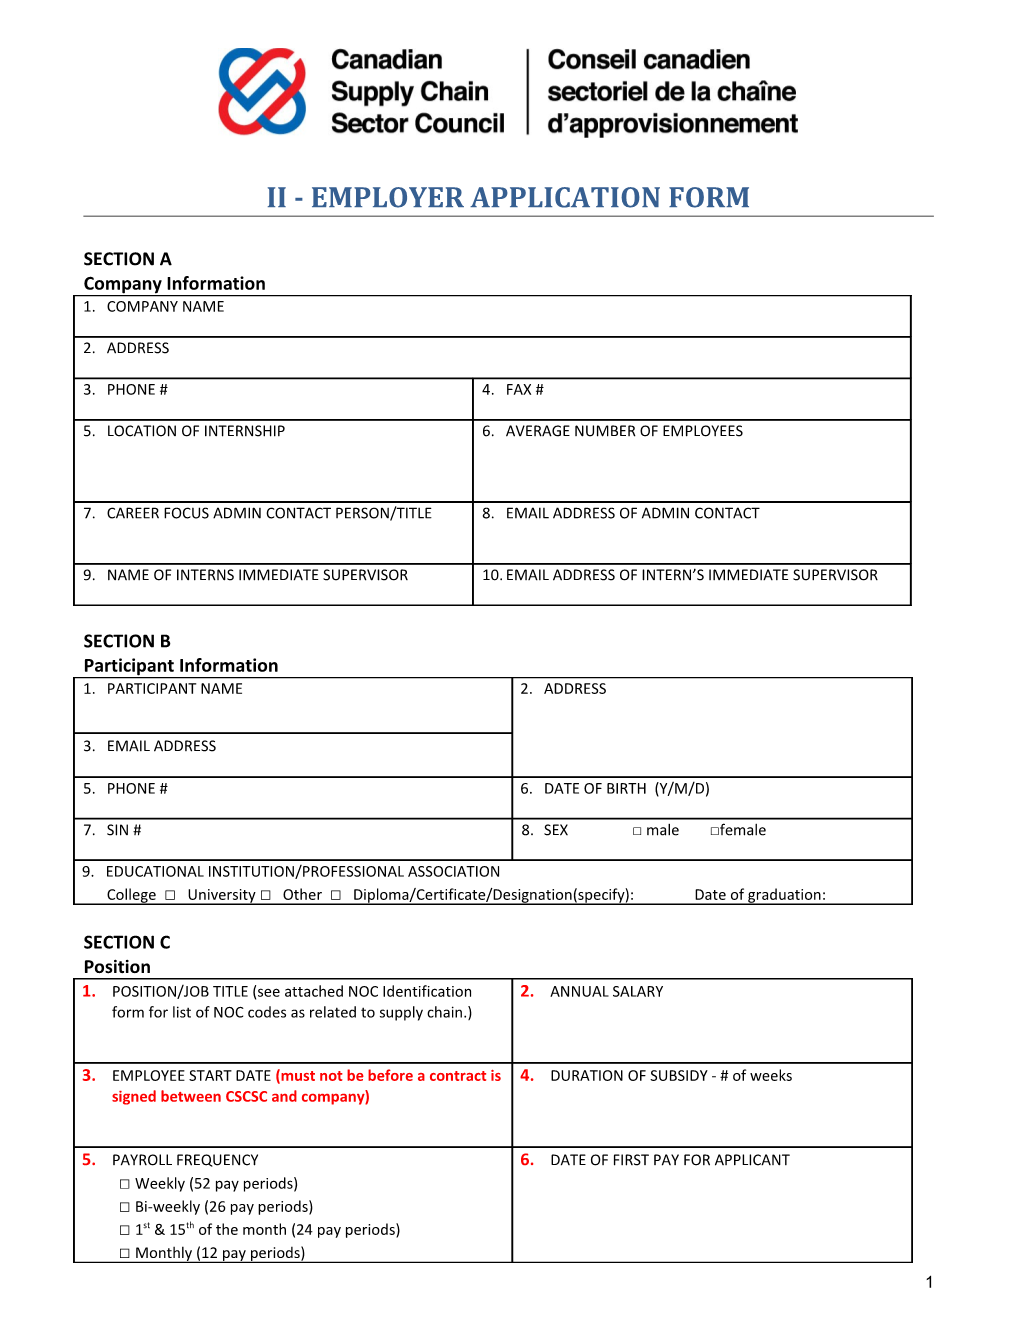 Ii - Employer Application Form